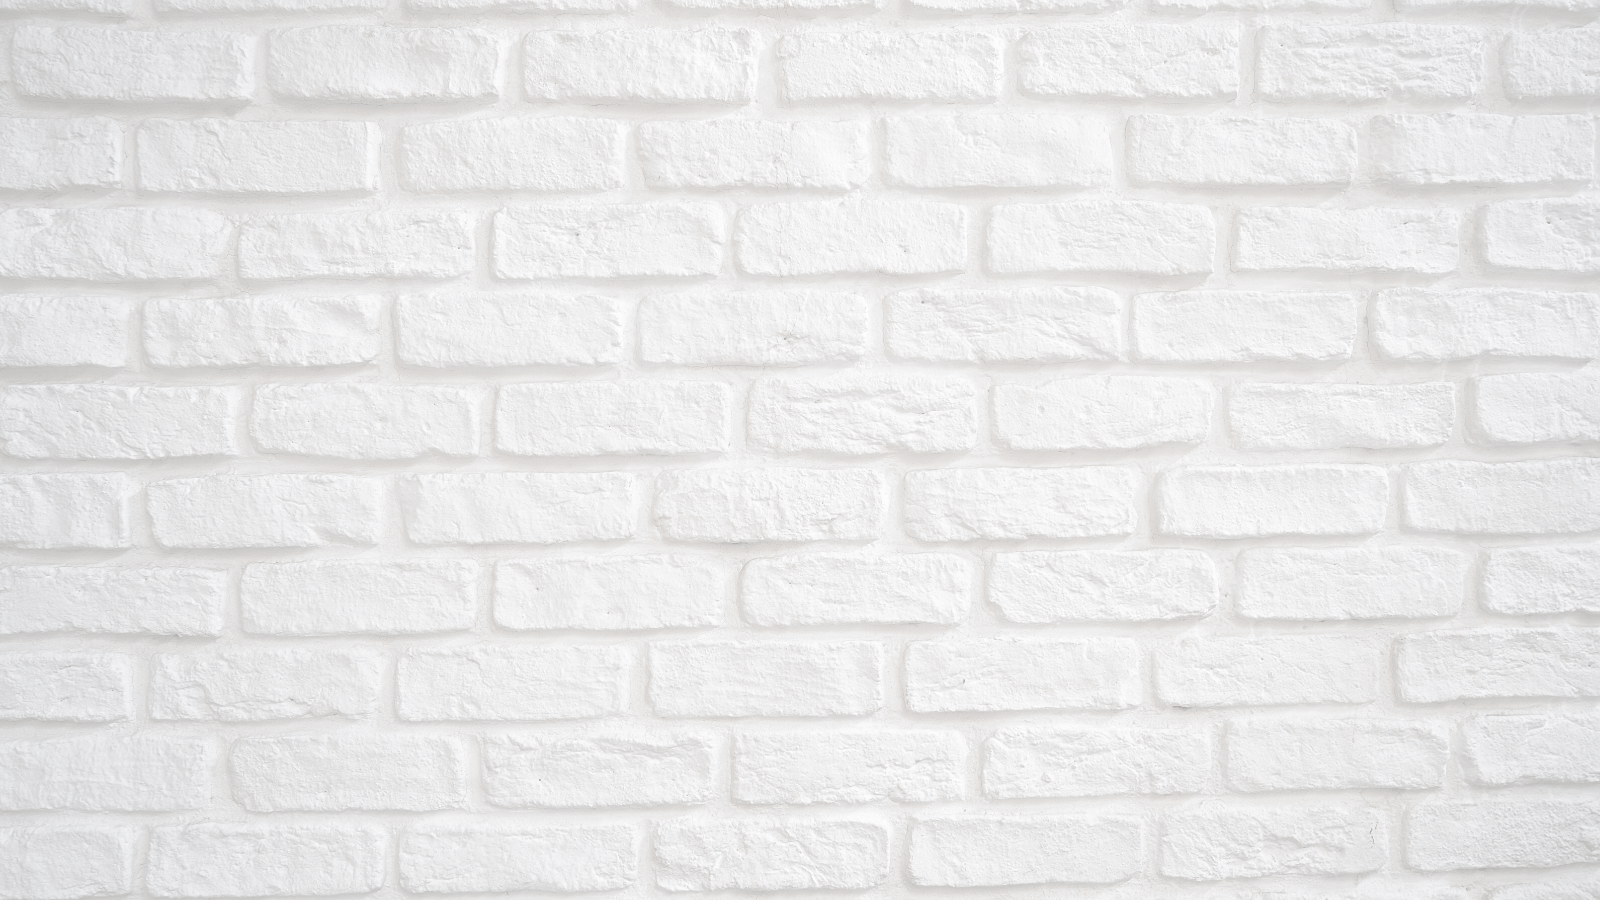 A white brick wall